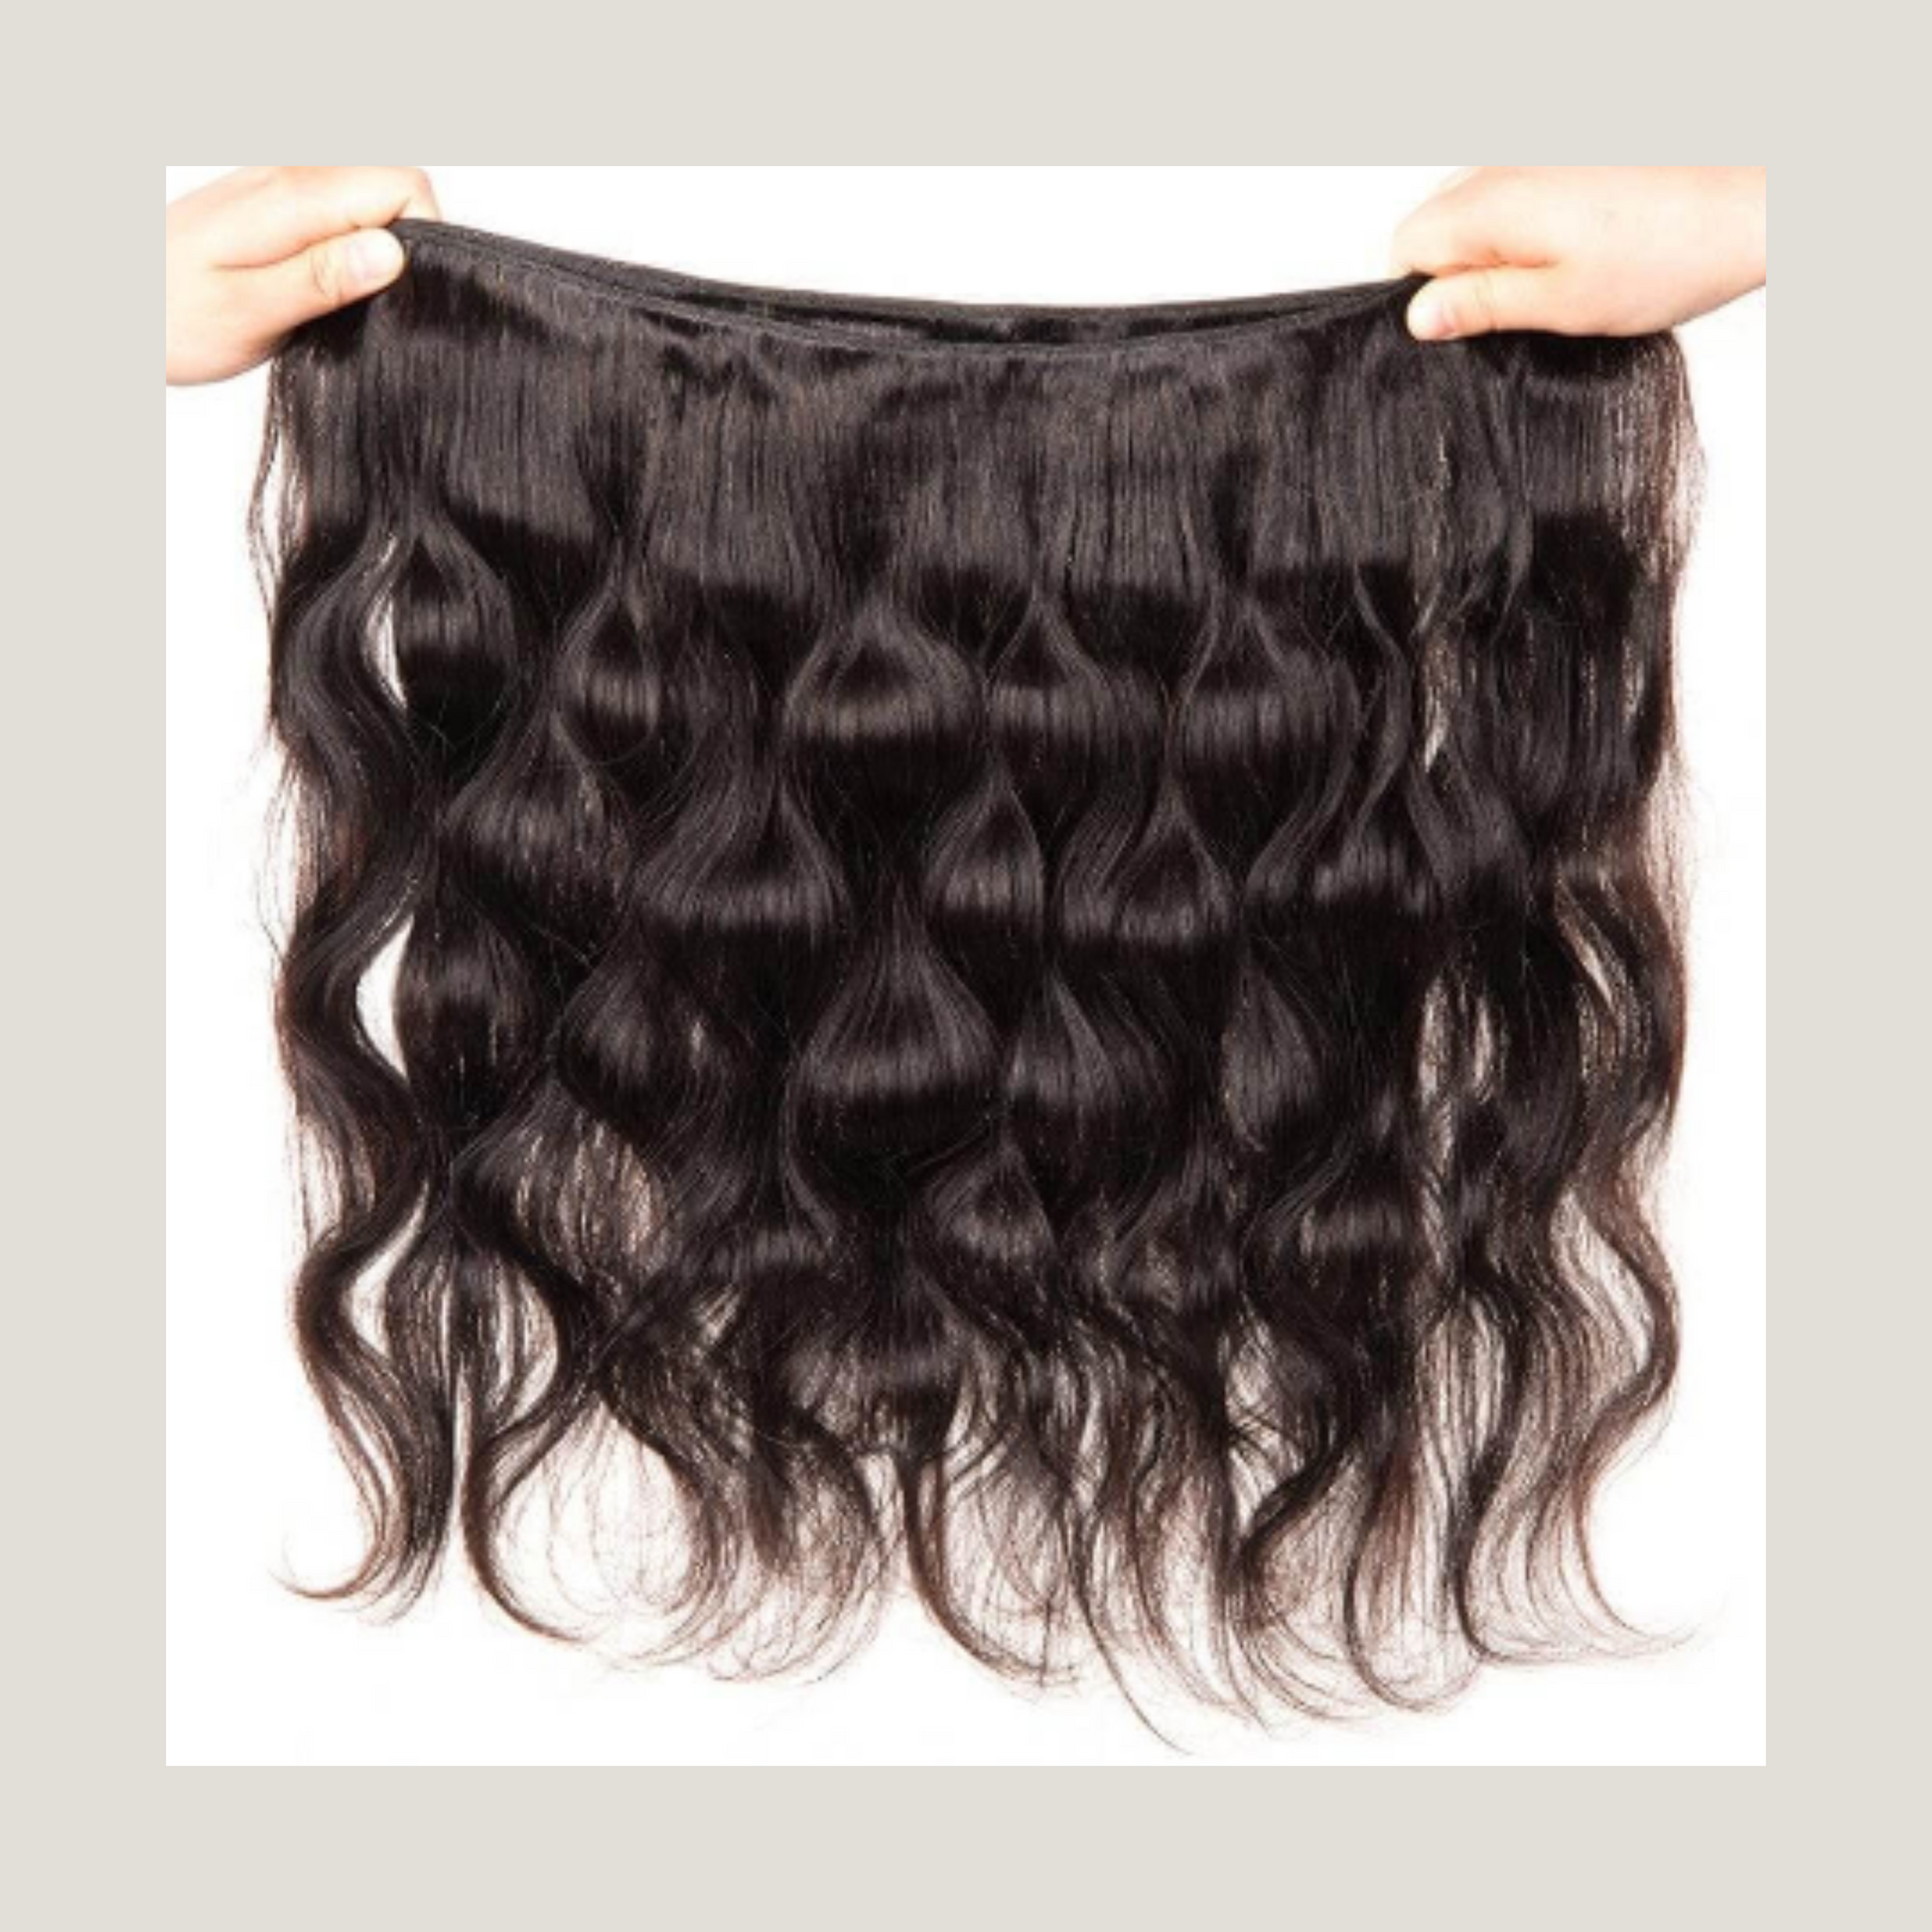 Amella Hair 8A Brazilian Curly Hair Weave 3 Bundles (14 16 18 inch,285g)  Virgin Kinky Human Hair 100% Unprocessed Hair Weft Extensions Natural Black